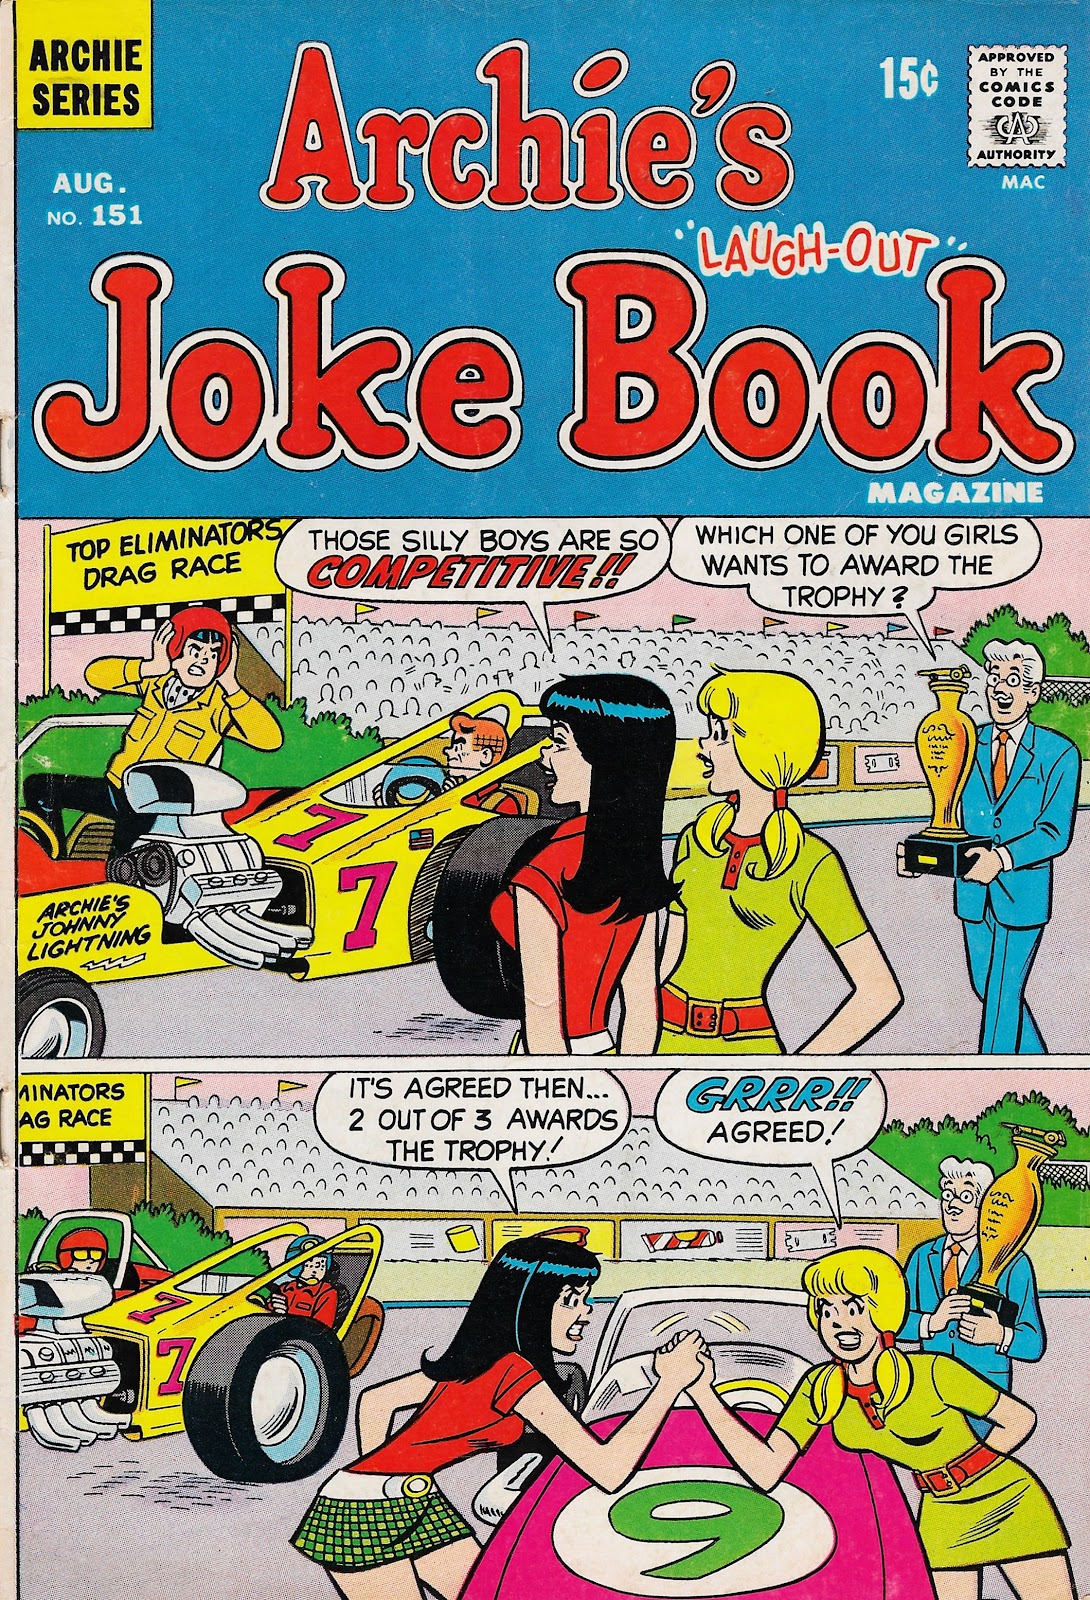 Archie's Joke Book Magazine issue 151 - Page 1